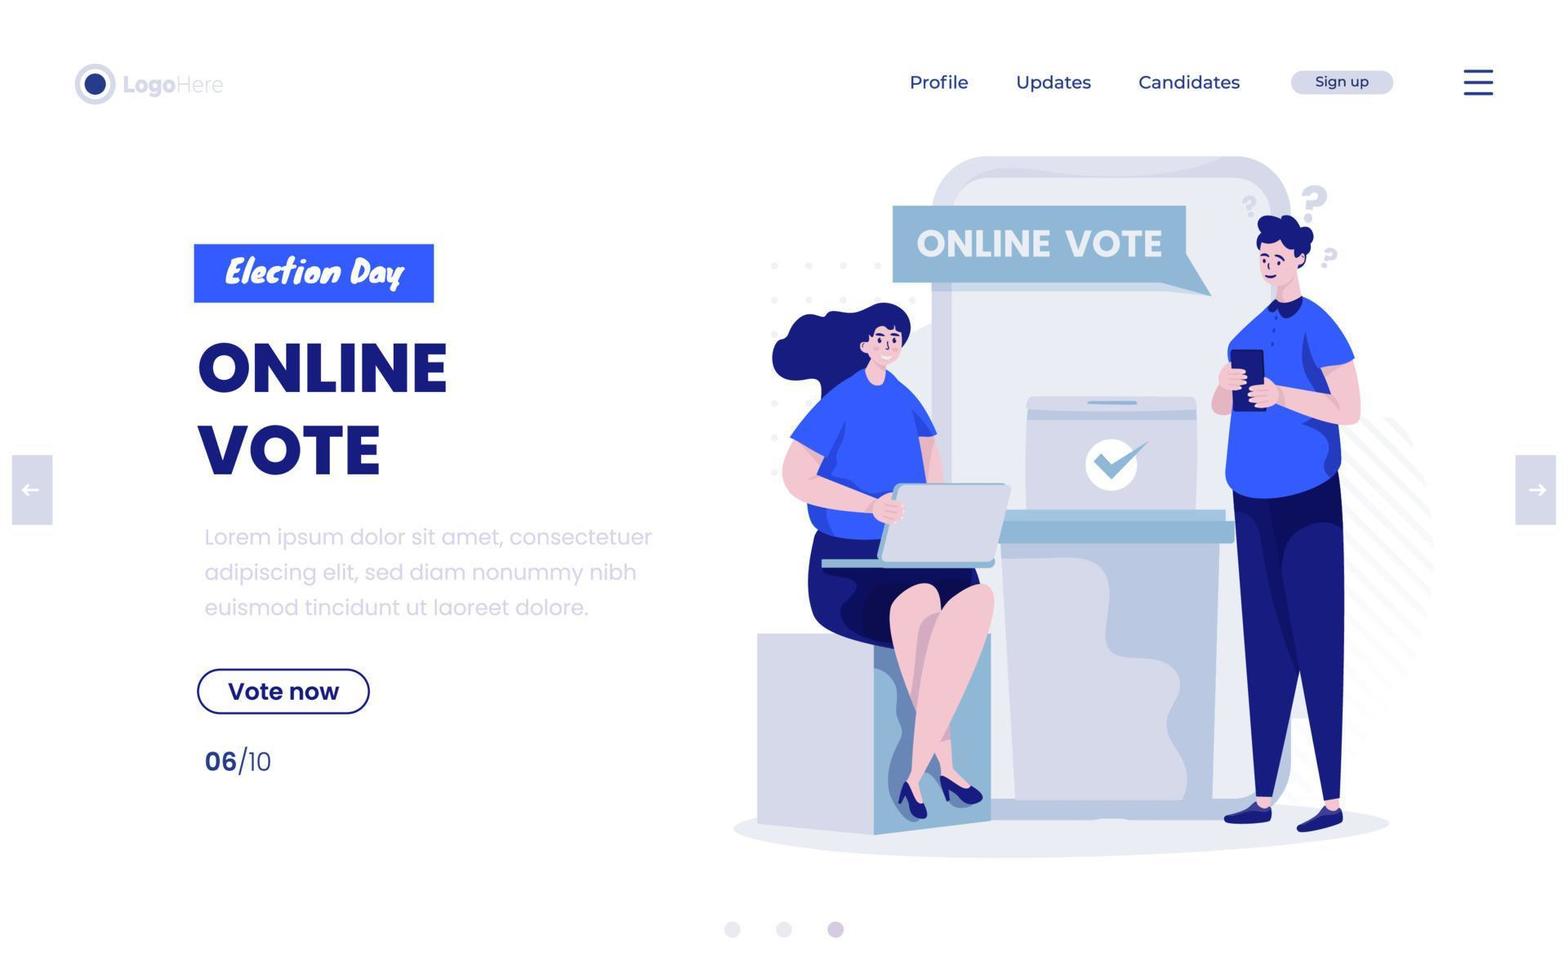 Online vote survey election day concept on landing page design vector